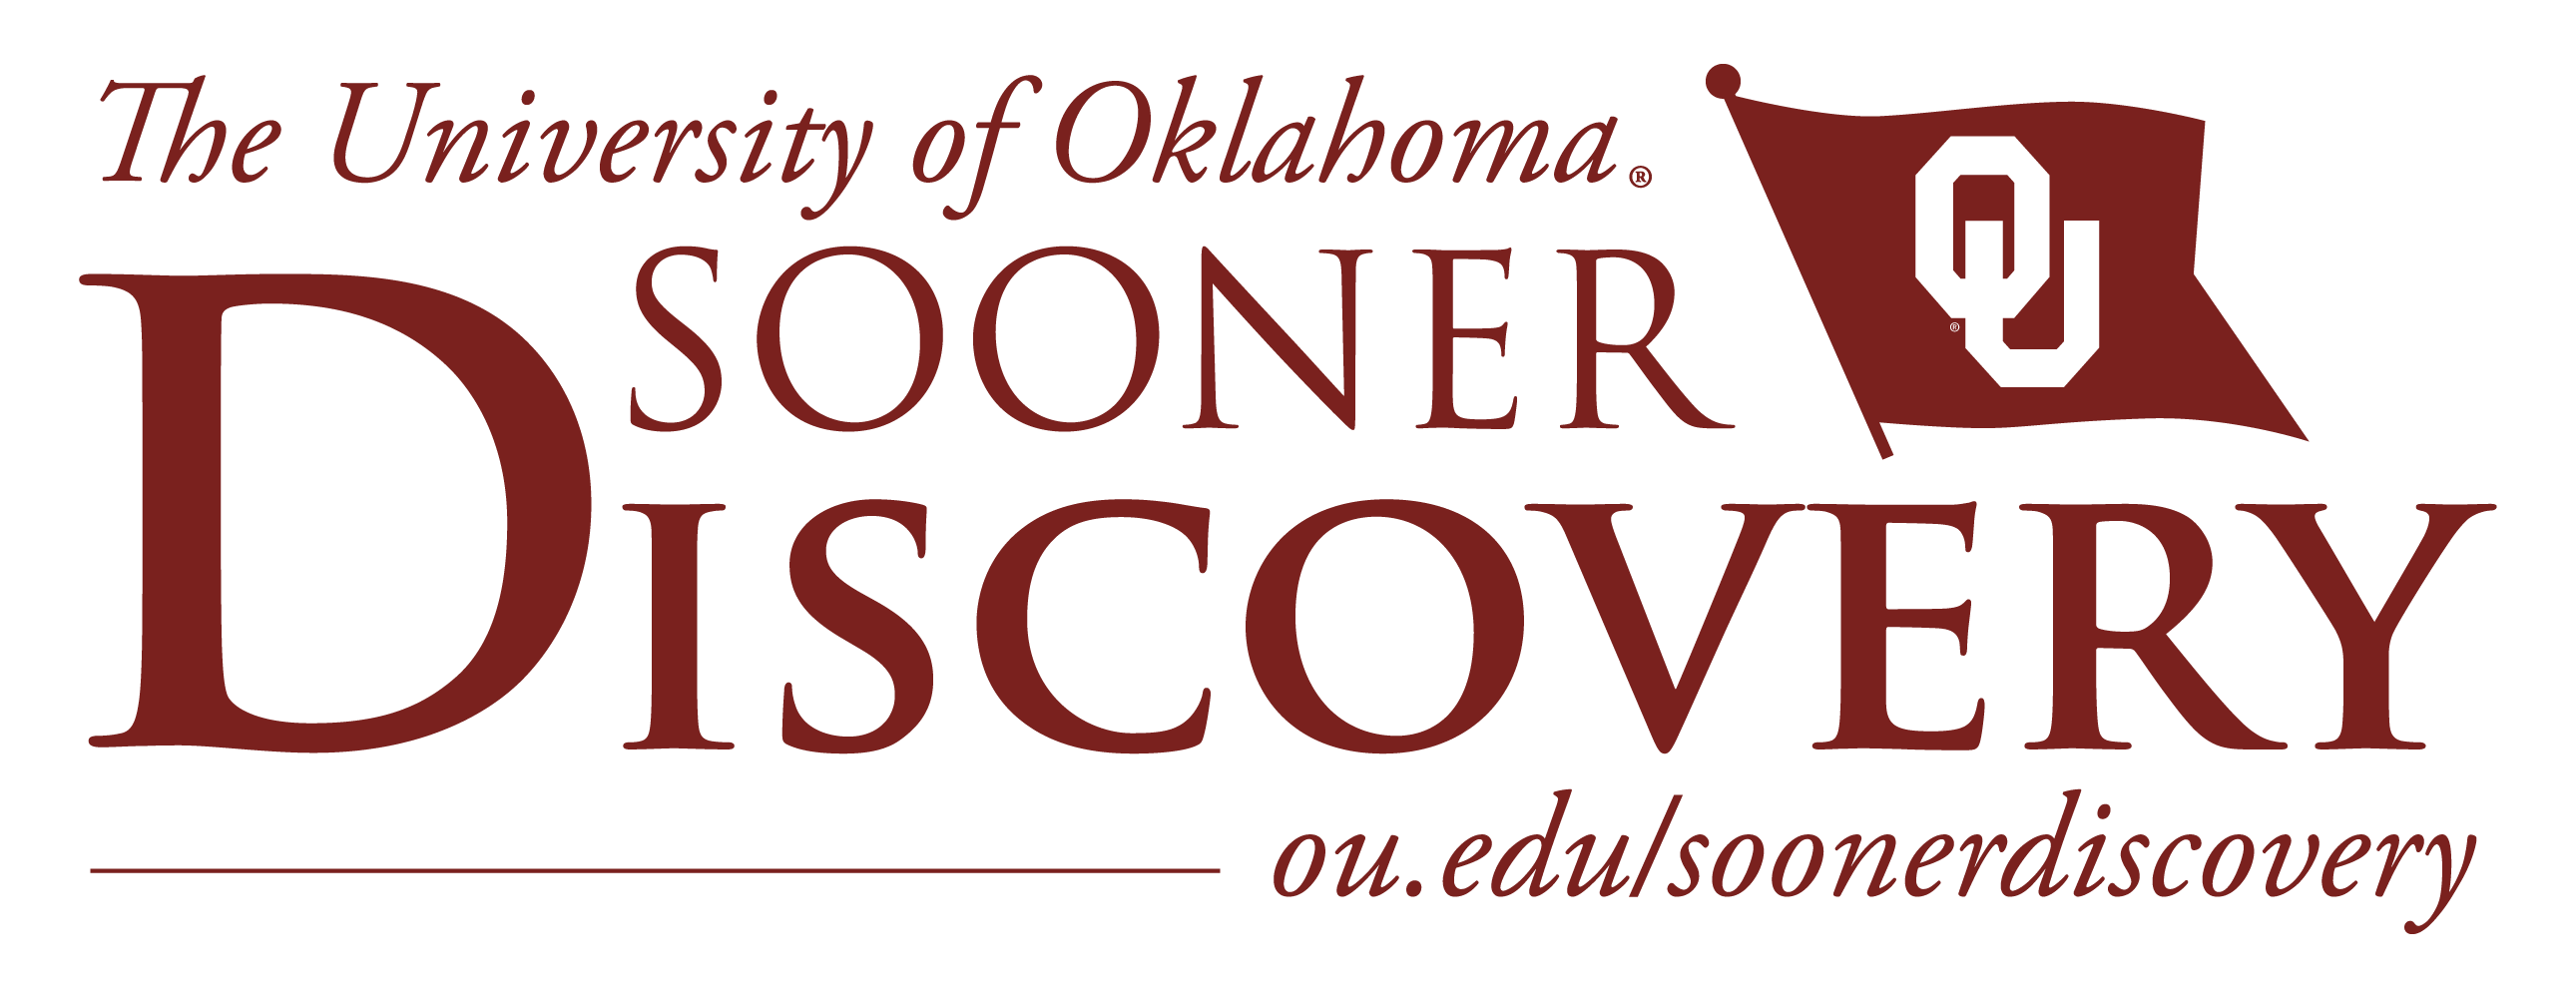 The University of Oklahoma, Sooner Discovery, OU flag, ou.edu/soonersdiscovery website wordmark.